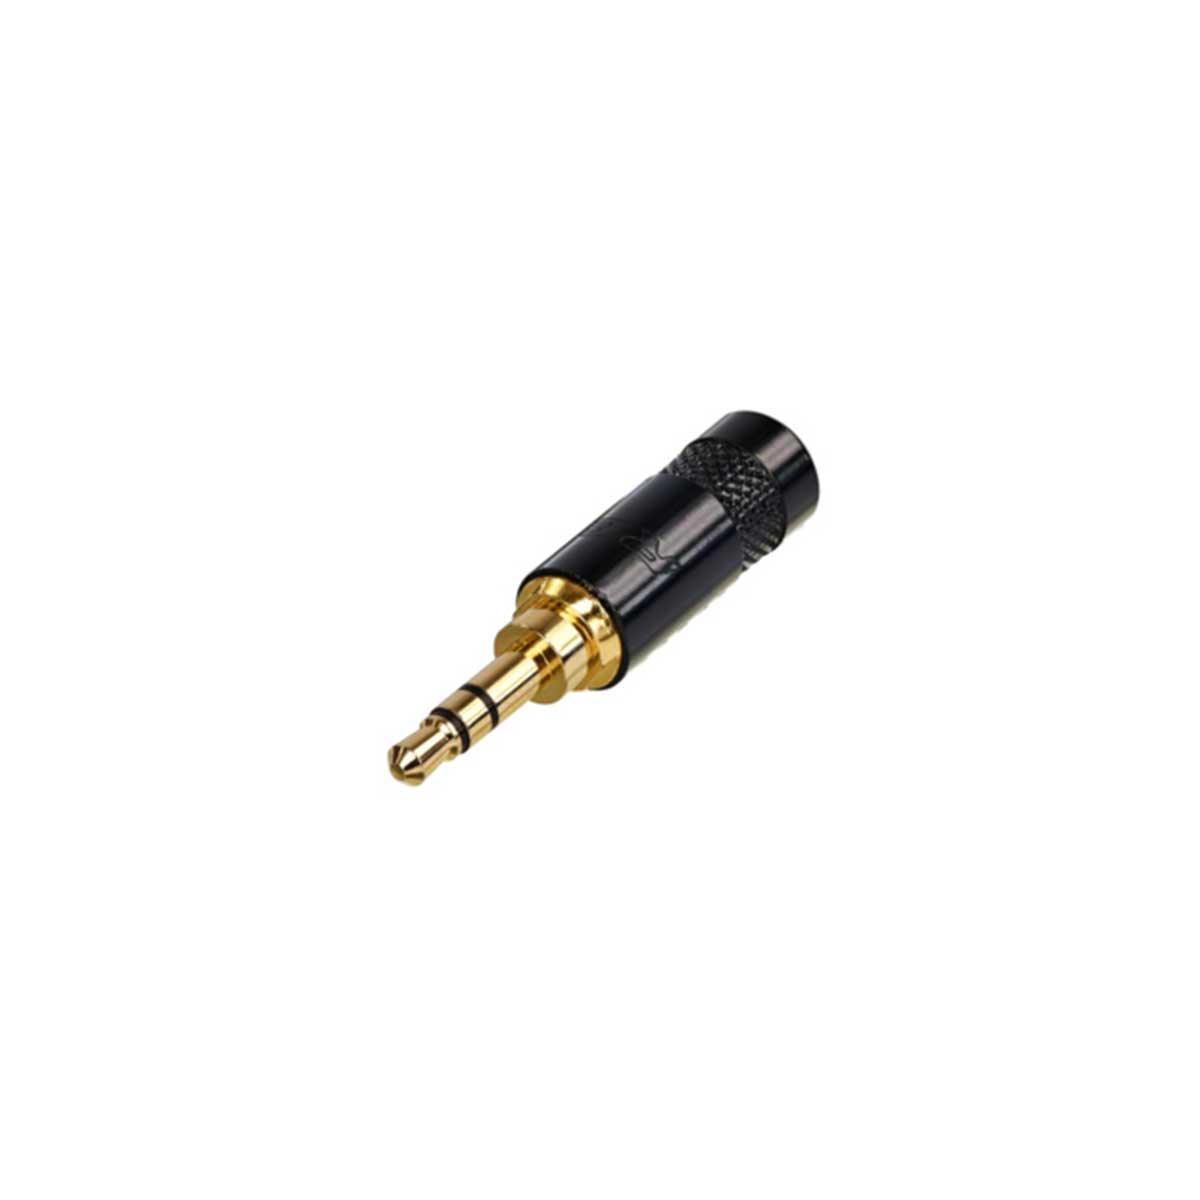 REAN NYS231BG 3.5mm TRS plug, black metal handle, gold contacts